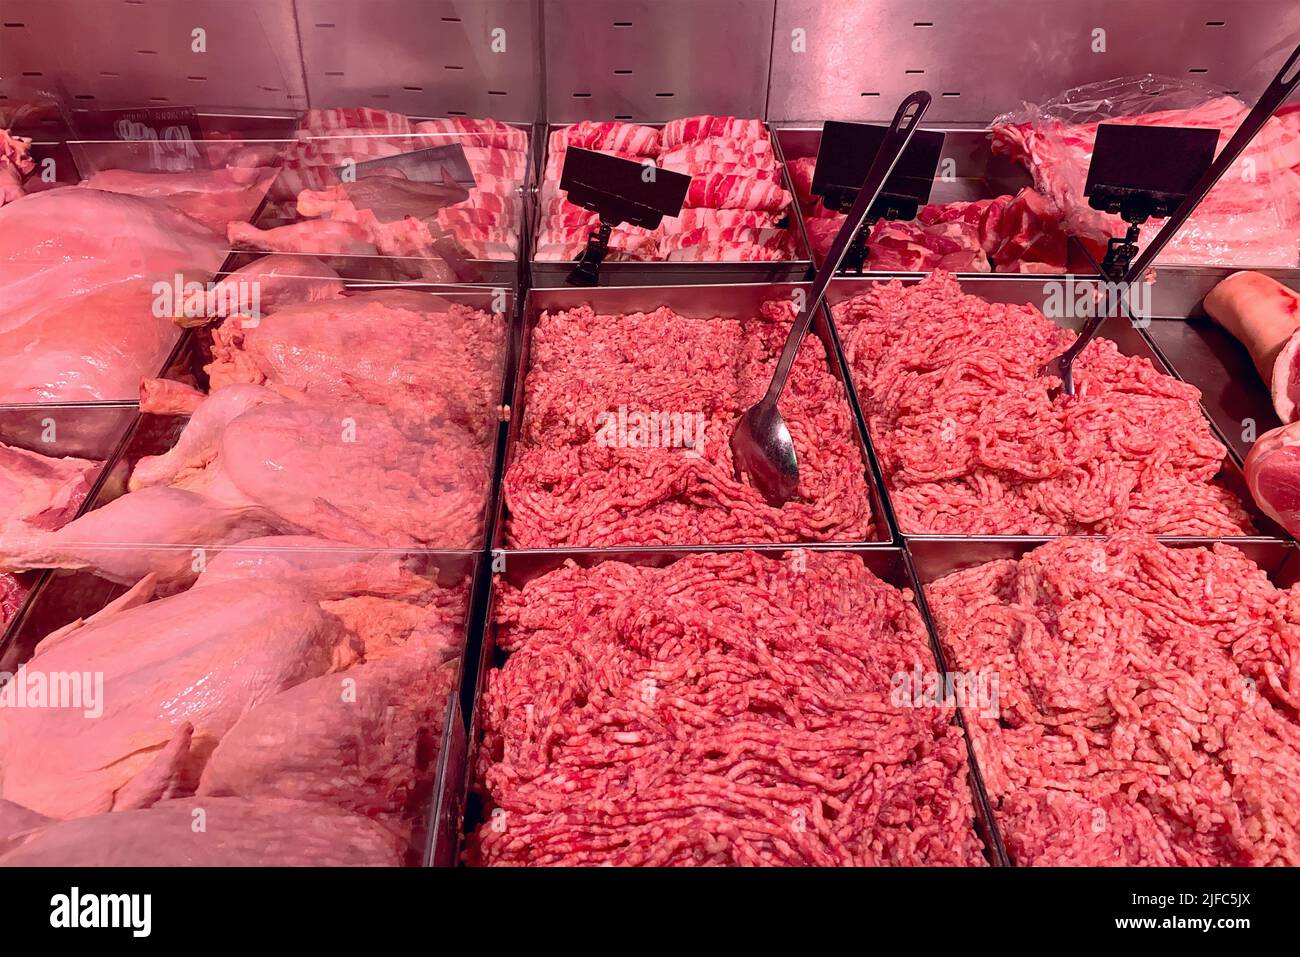 https://c8.alamy.com/comp/2JFC5JX/quality-various-fresh-raw-minced-meat-in-fridge-showcase-at-modern-butcher-shop-meat-counter-close-up-2JFC5JX.jpg